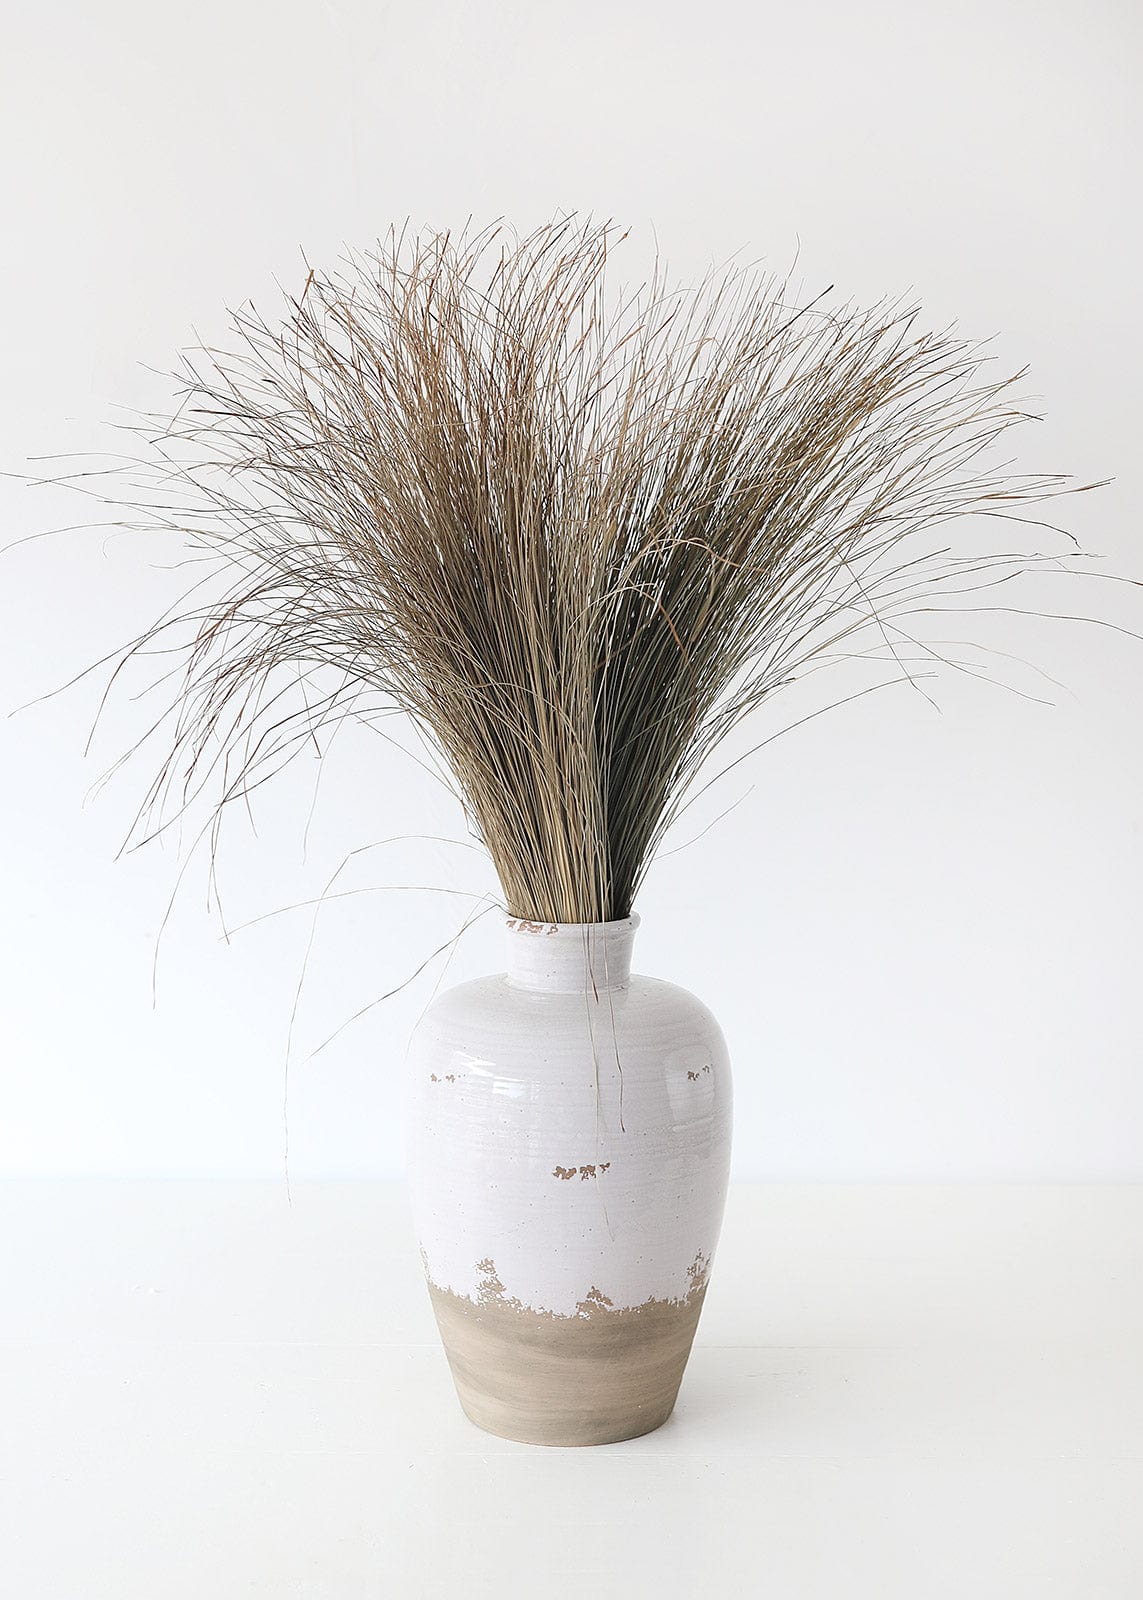 Afloral Natural Dune Grass Styled in Large Ceramic Vase